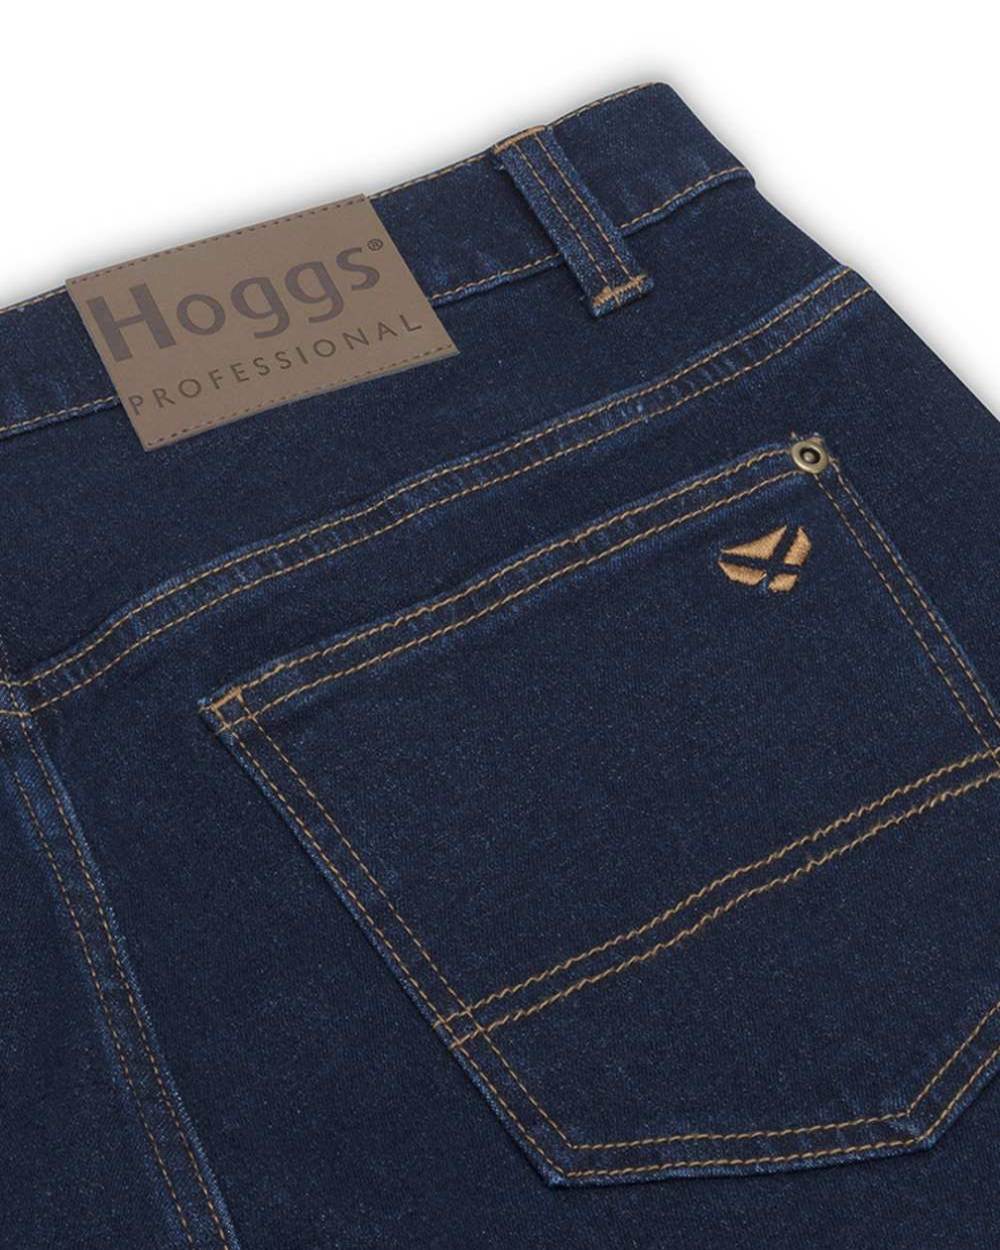 Dark Indigo coloured Hoggs of Fife Clyde Comfort Denim Jeans on white background 